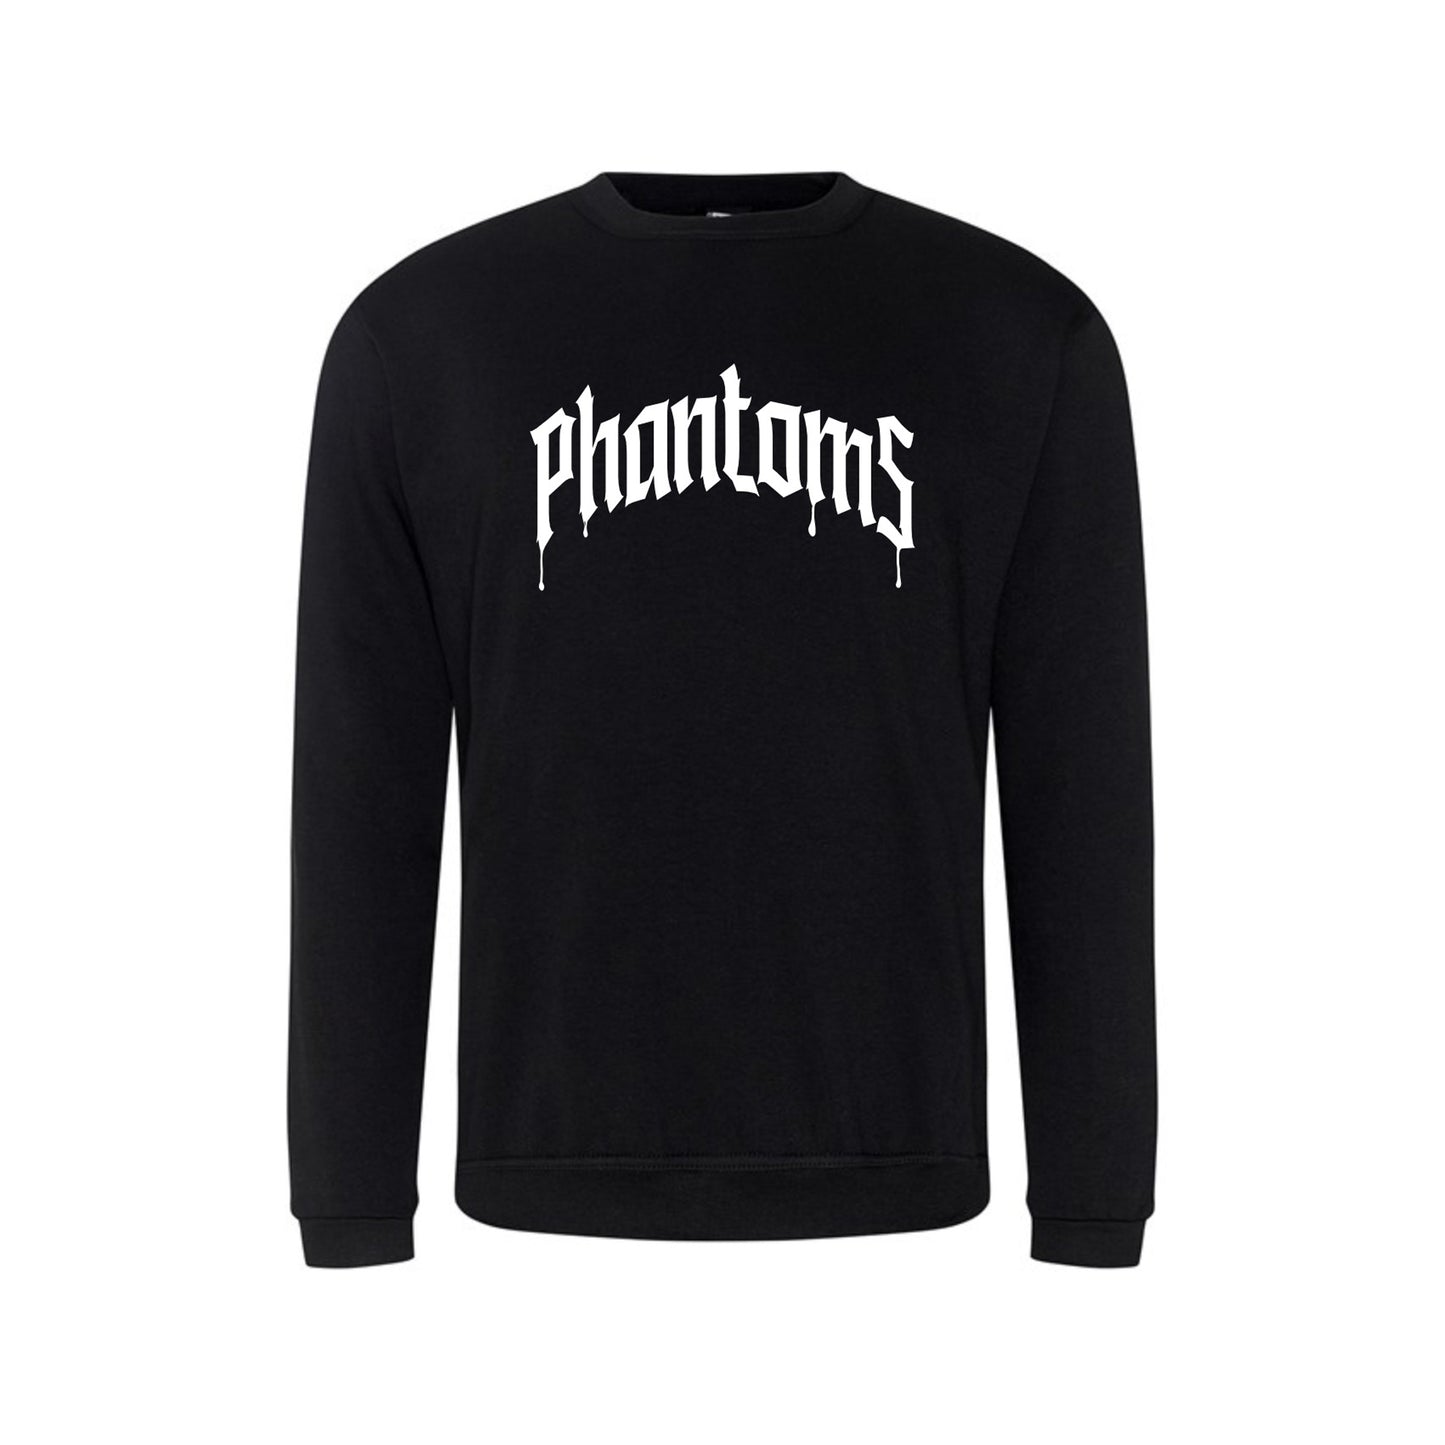 Phantoms Sweatshirt